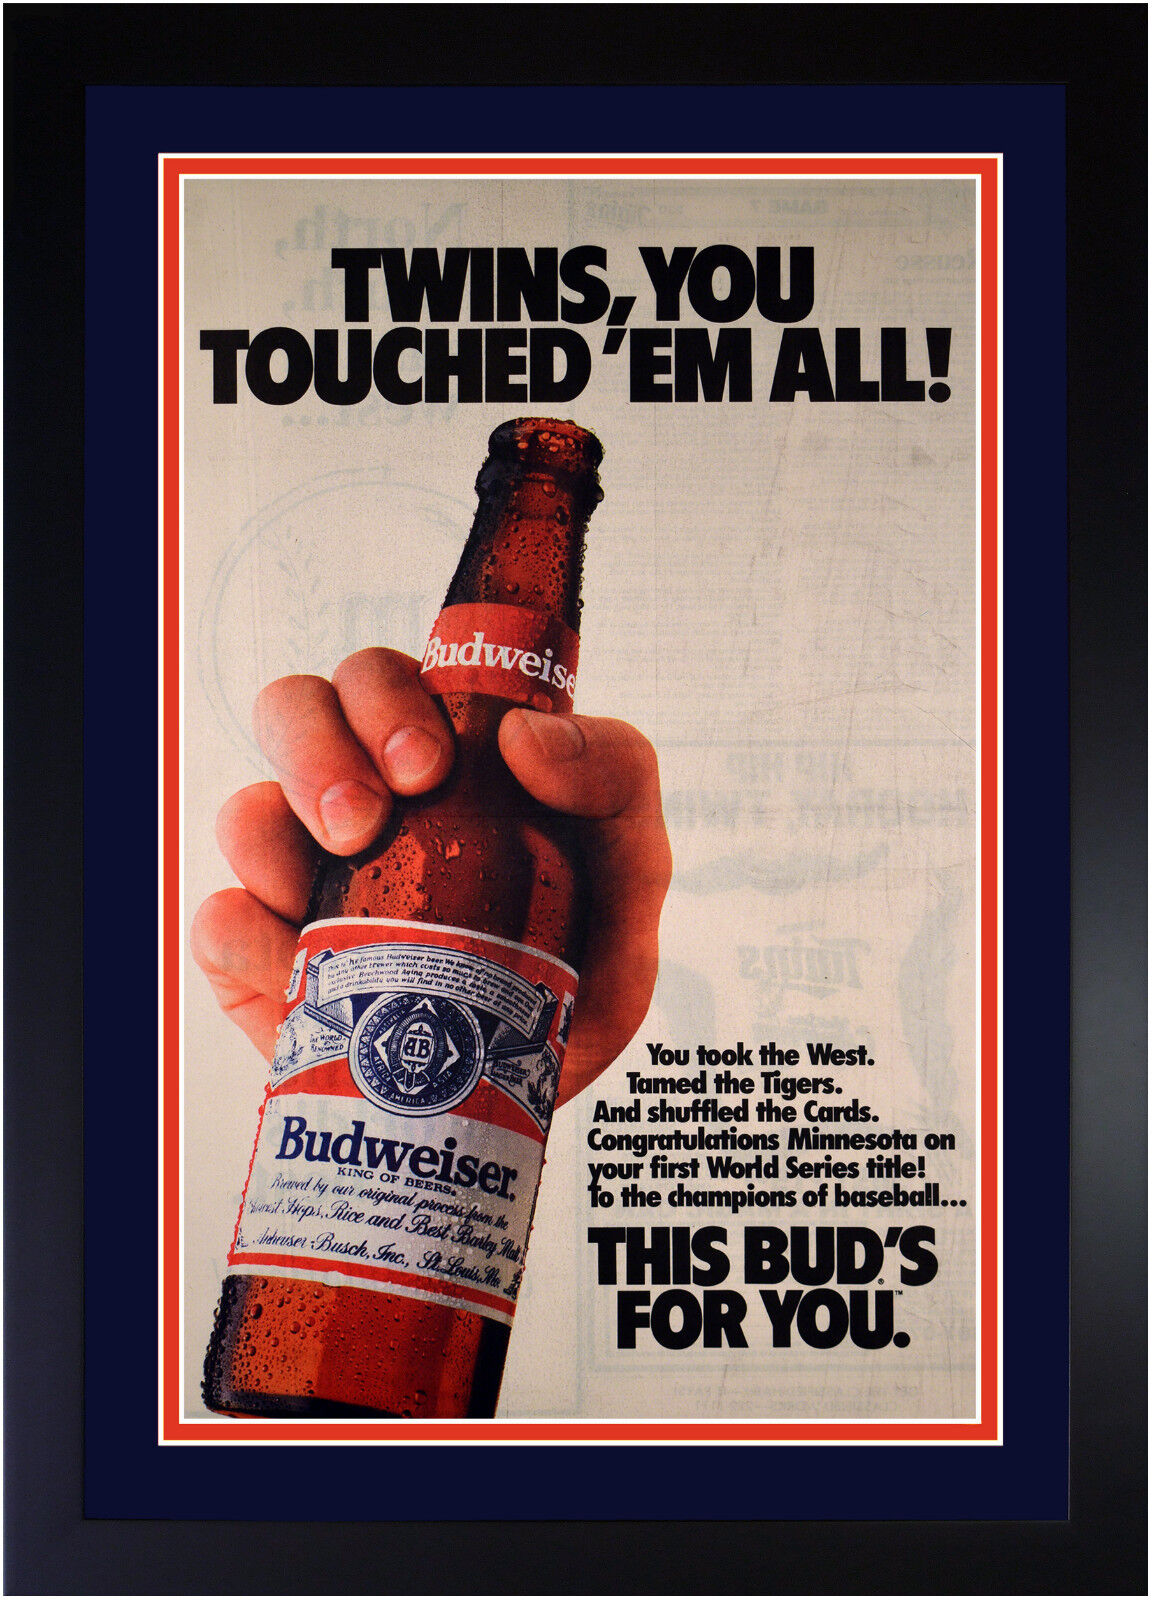 Minnesota Twins 1987 World Series Newspaper Ad by Budweiser Beer Original 18x28